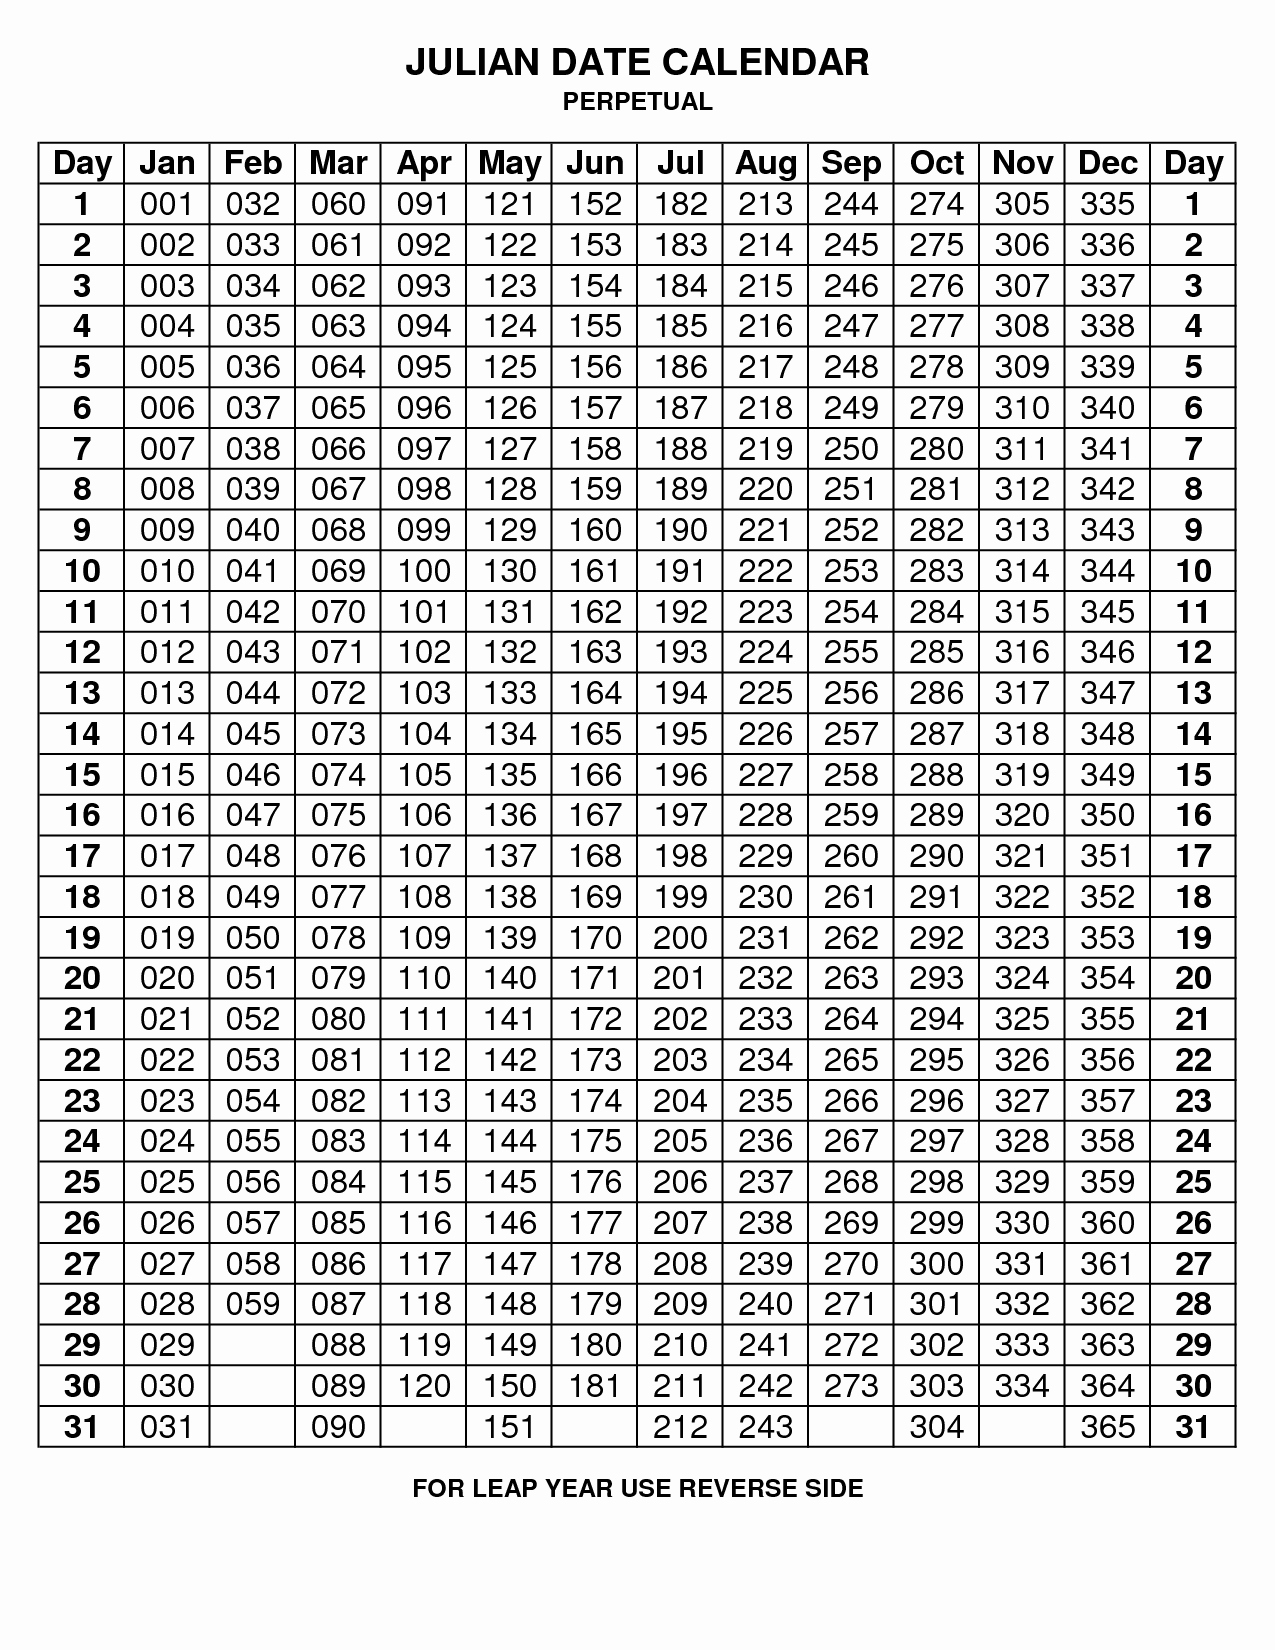 Depo Provera Perpetual Calendar To Print - Calendar Depo-Provera Shot Calendar 2021